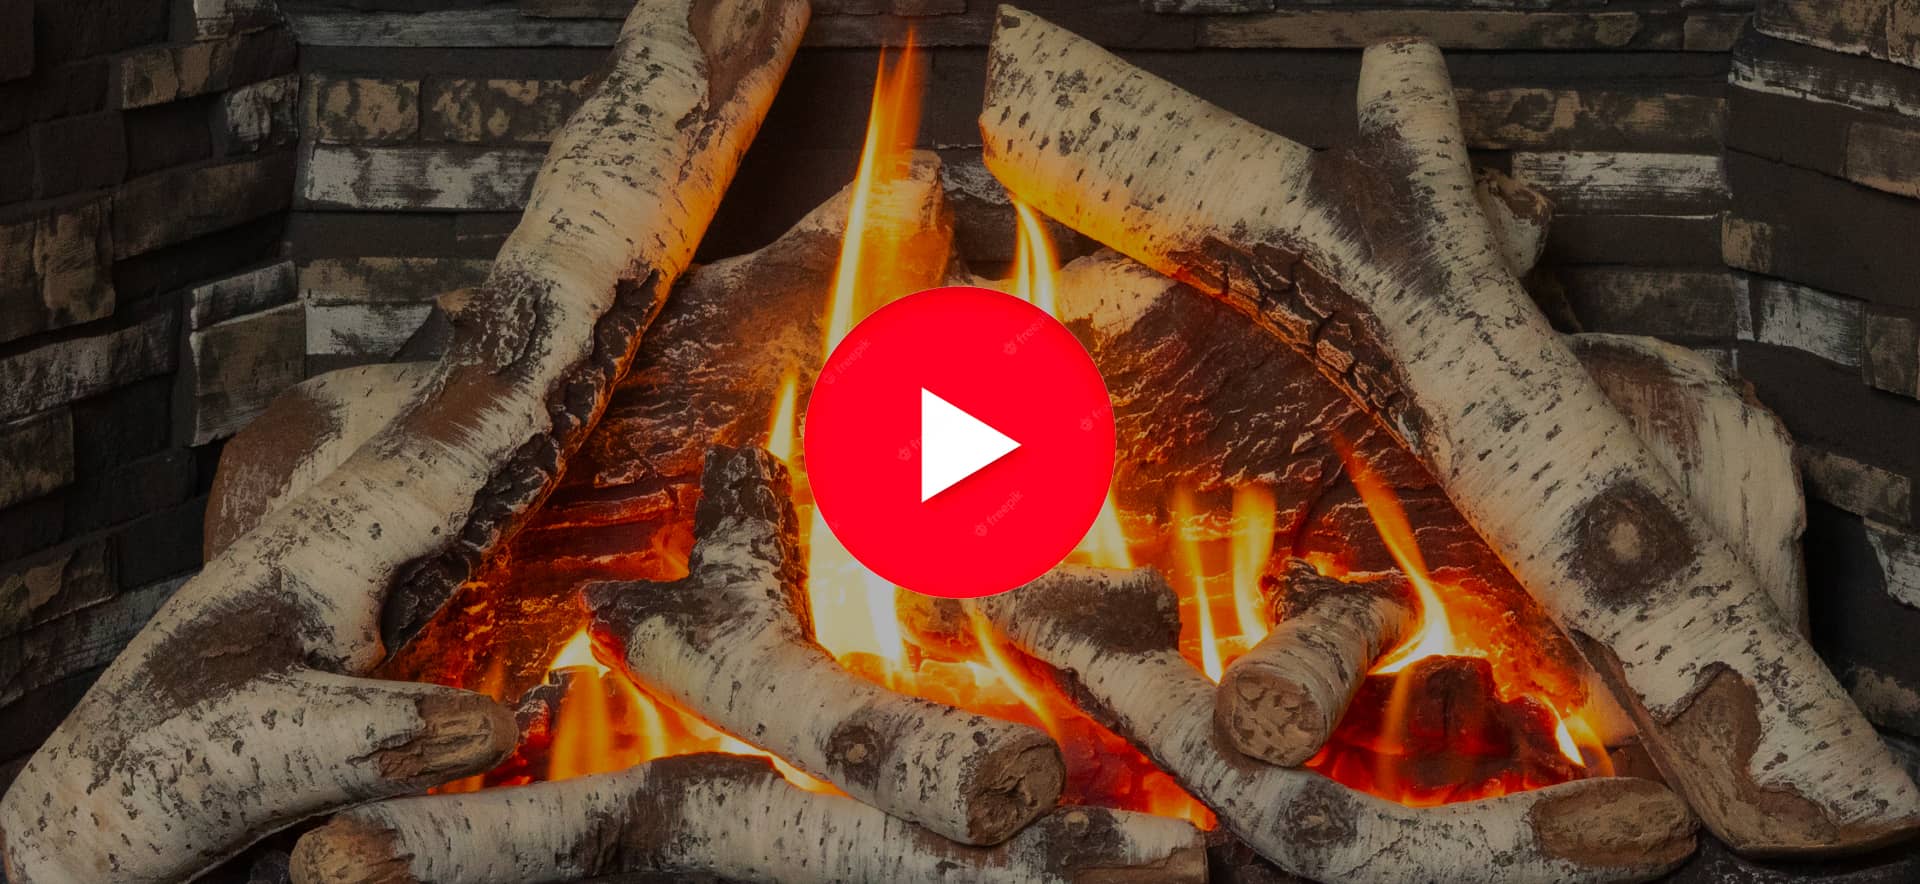 Fireplace Videos